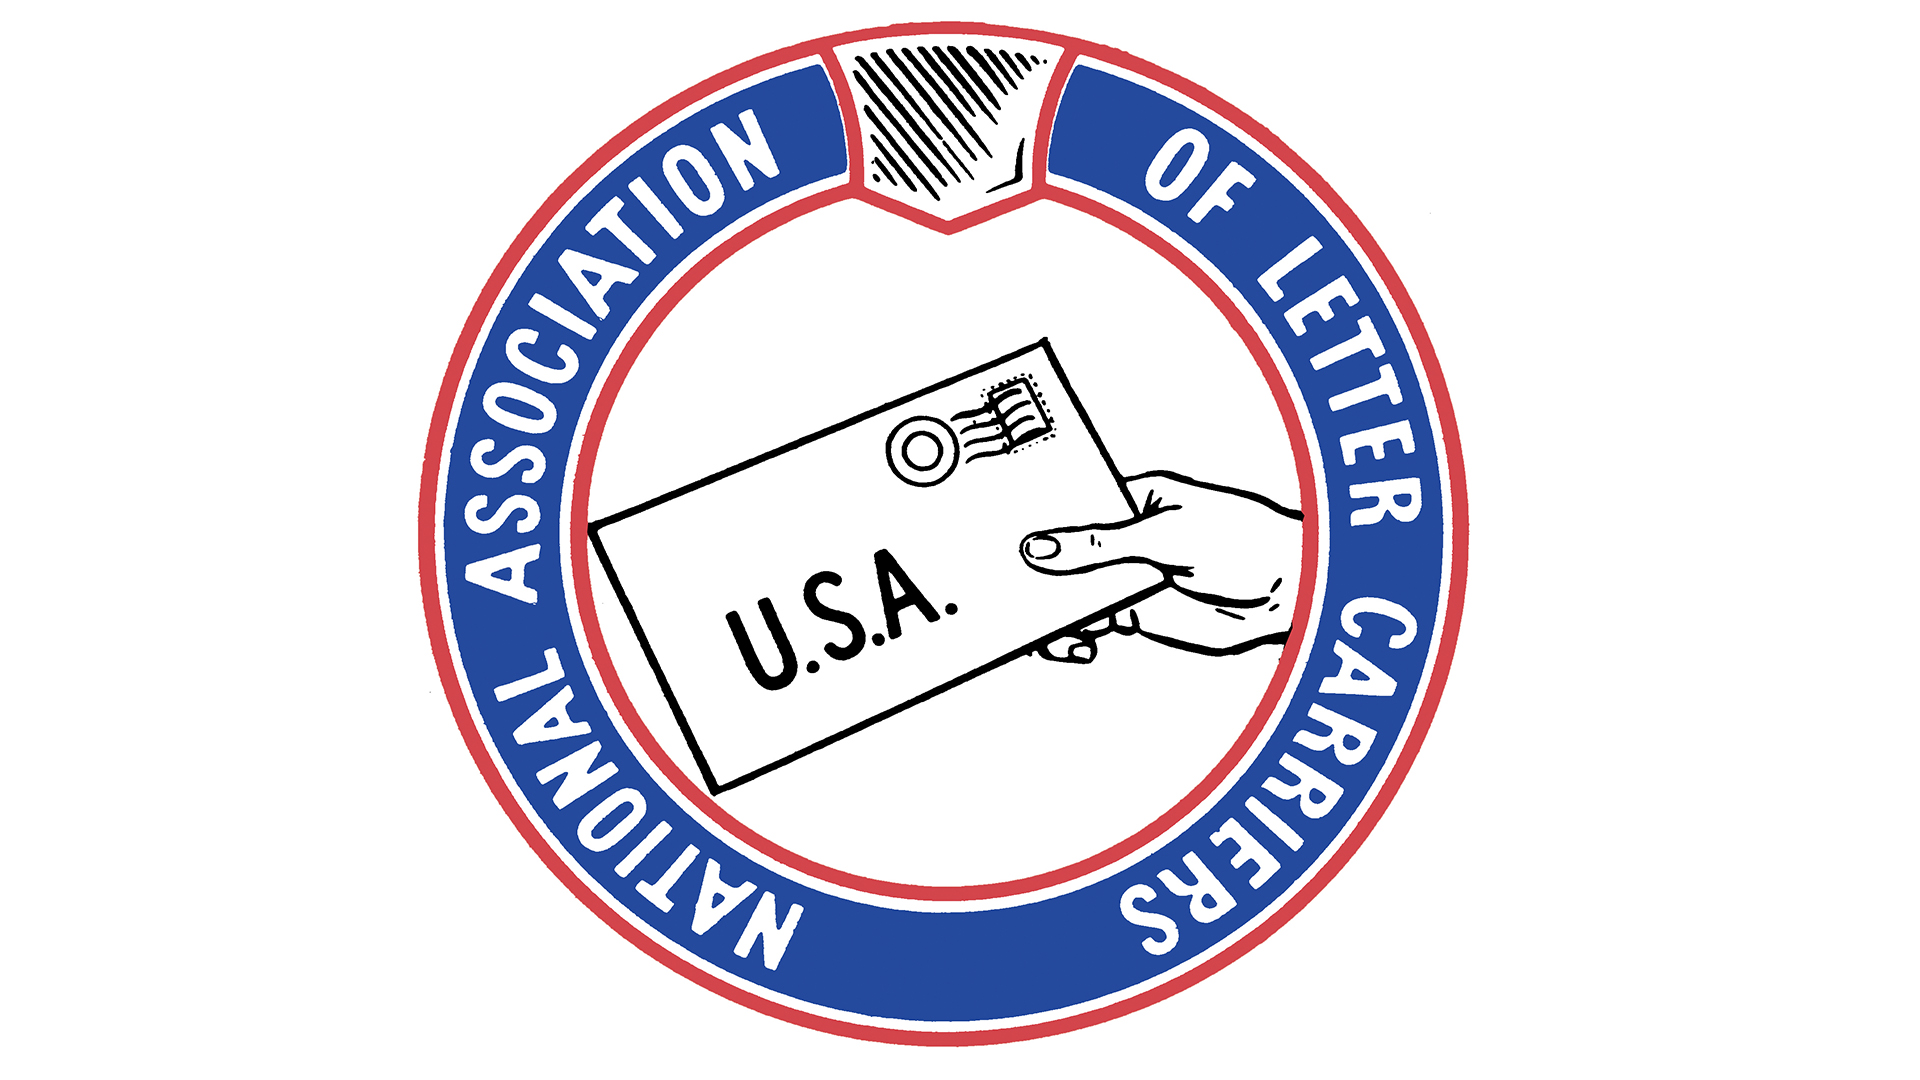 National Association of Letter Carriers logo